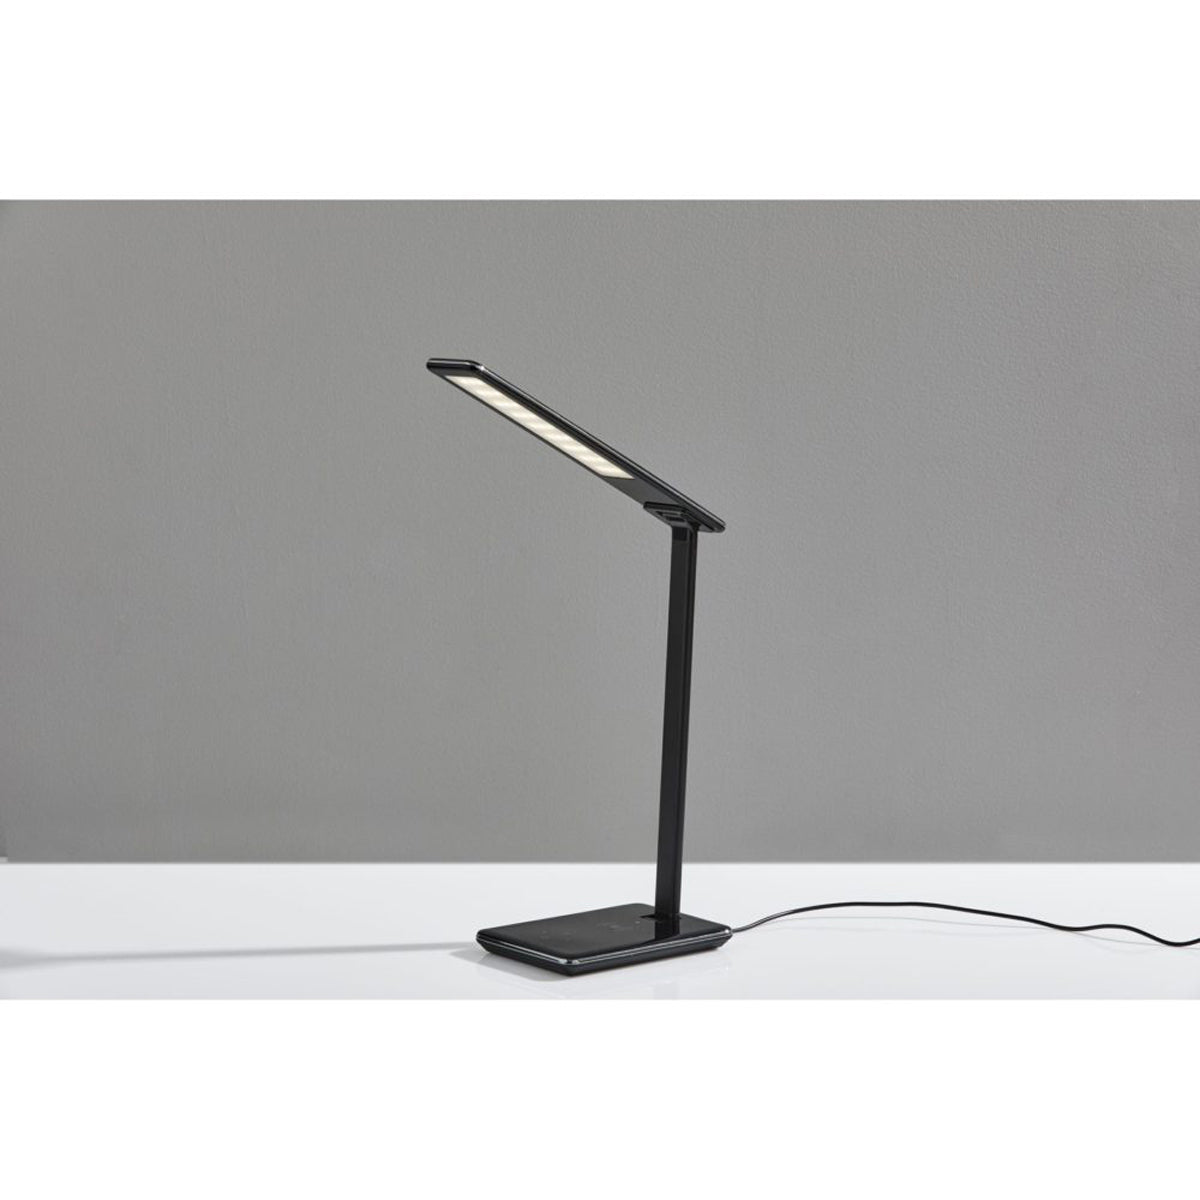 Declan AdessoCharge LED Desk Lamp